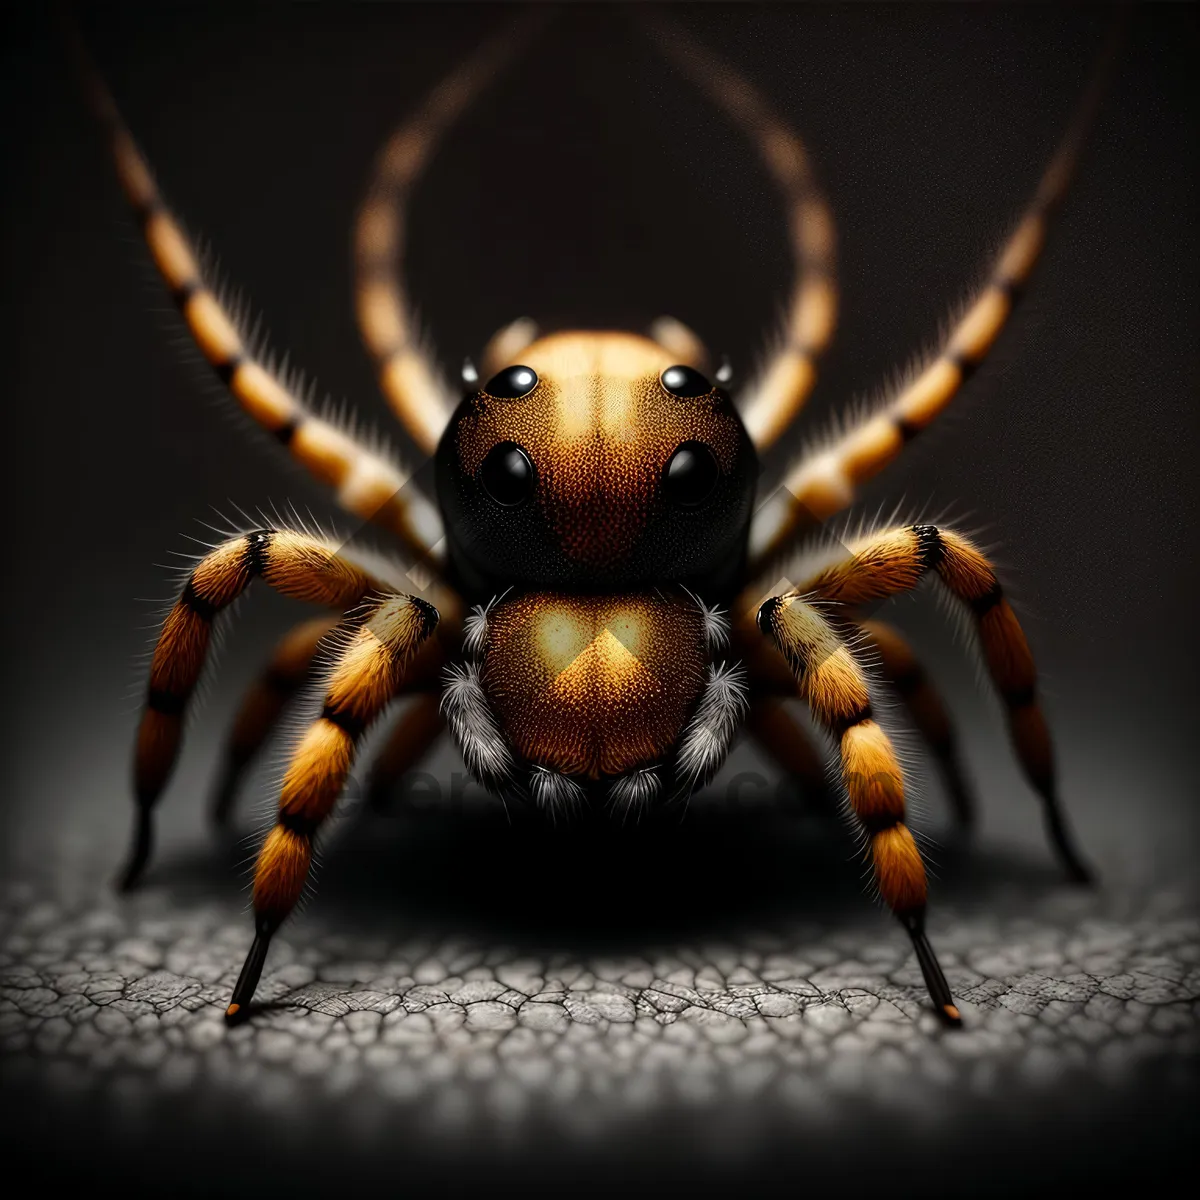 Picture of Garden Arachnid Closeup: Majestic Spider in Wildlife.